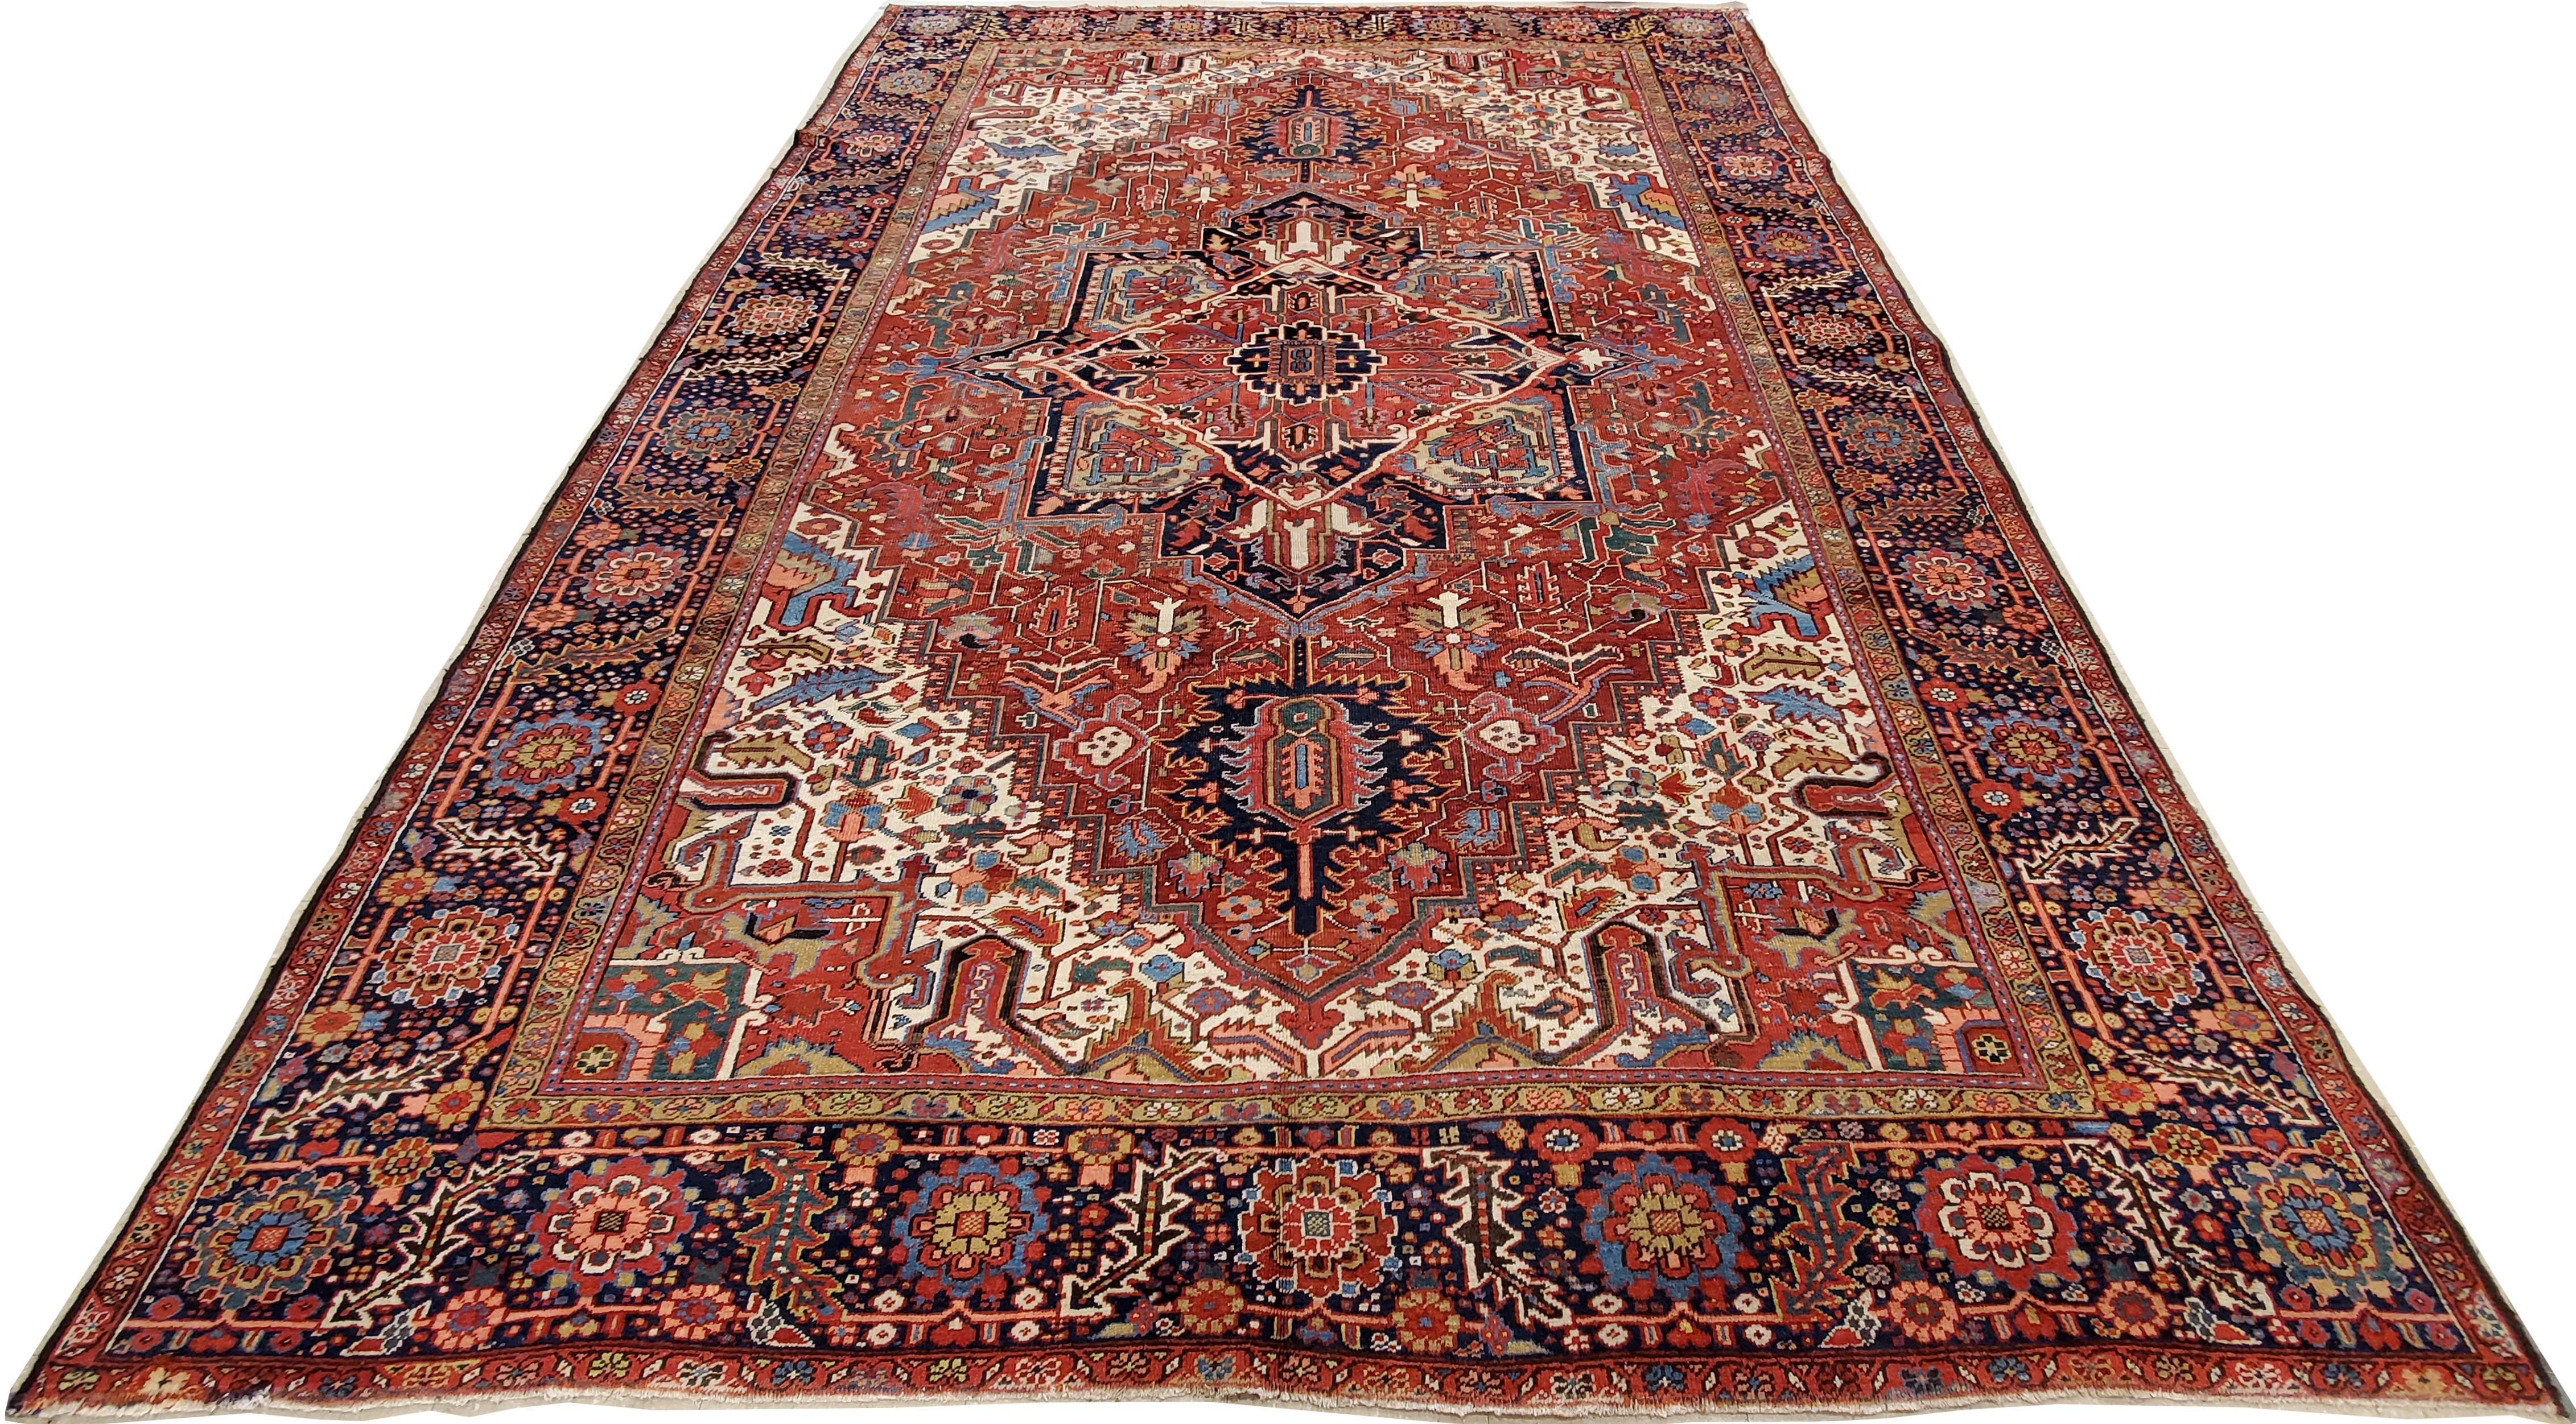 Antique Persian Heriz Carpet, Handmade Wool Oriental Rug, Rust, Navy, Lt Blue For Sale 1